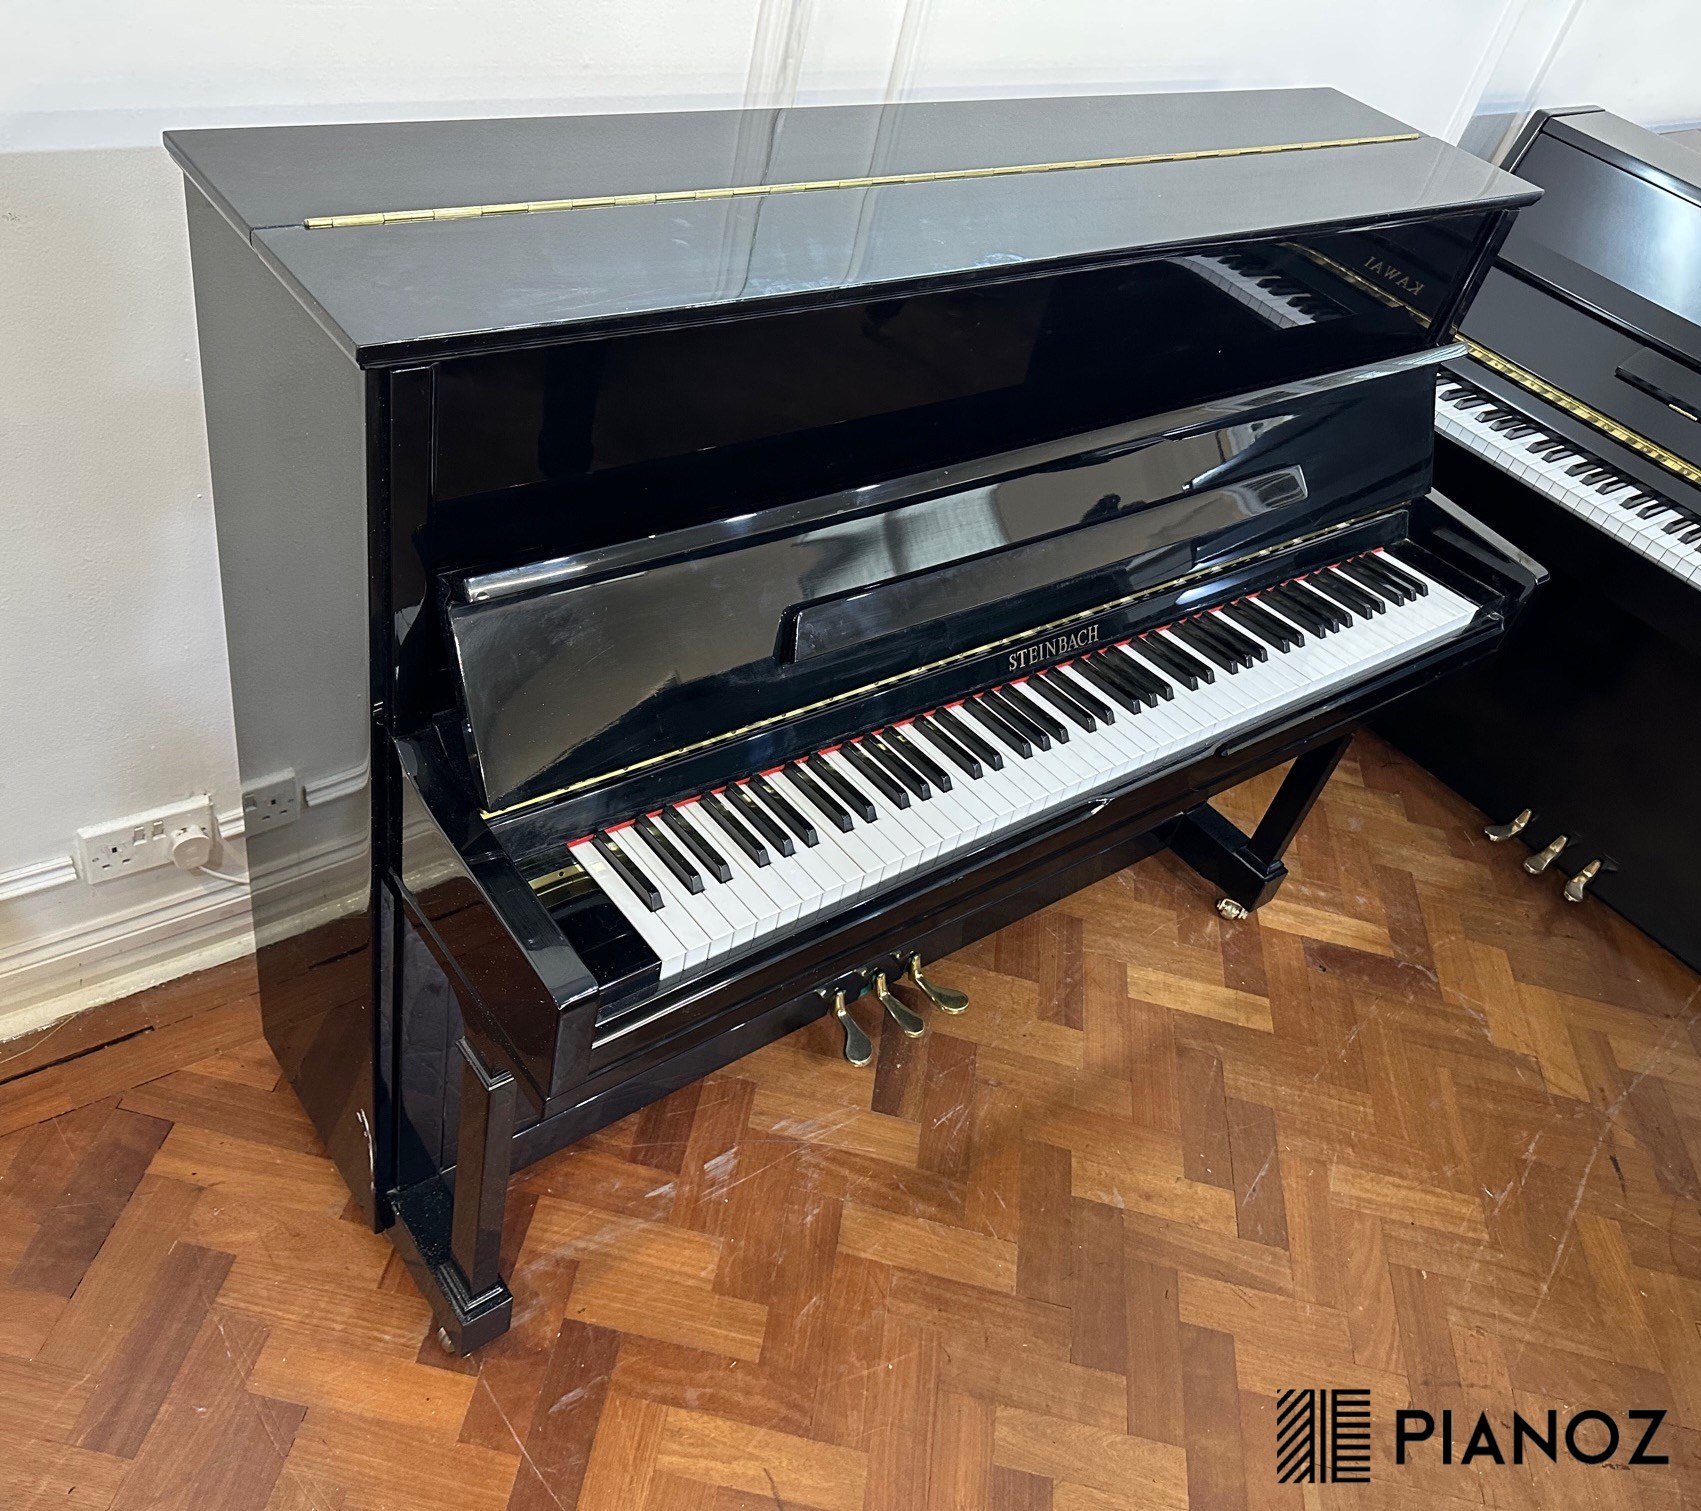 Steinbach 118 Upright Piano piano for sale in UK